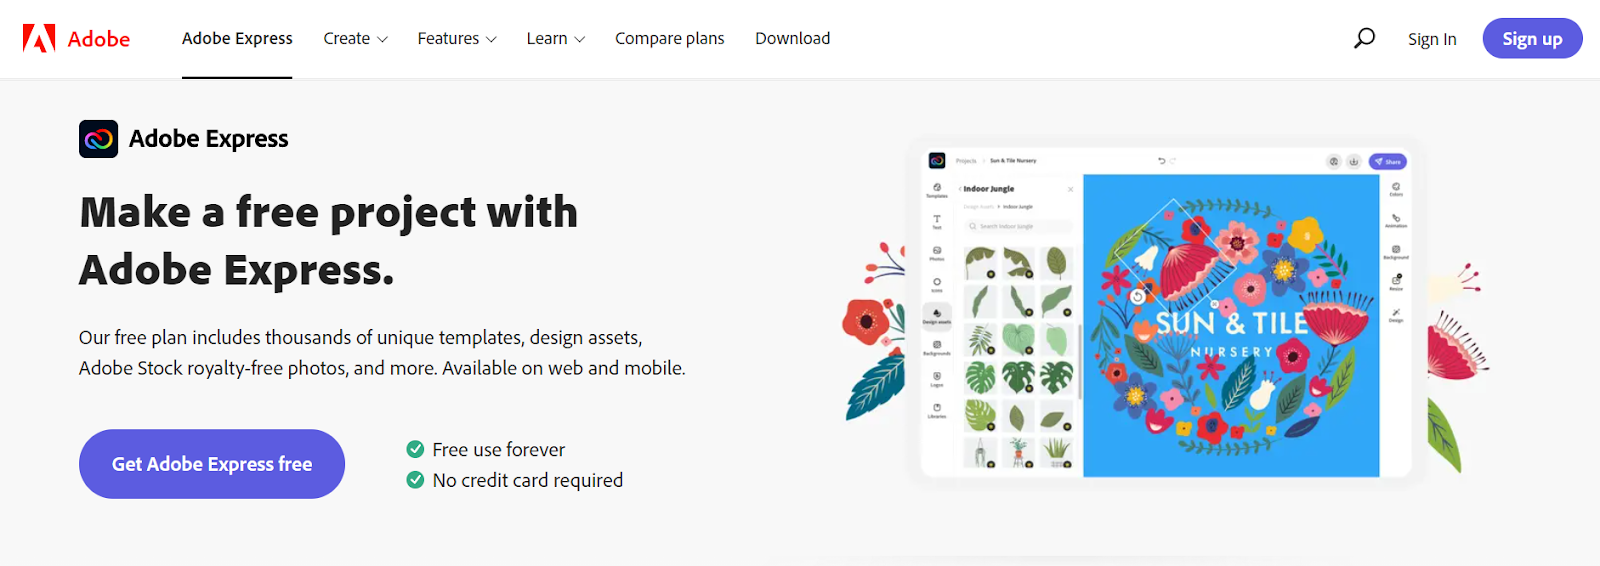 adobe express free online graphic design tool